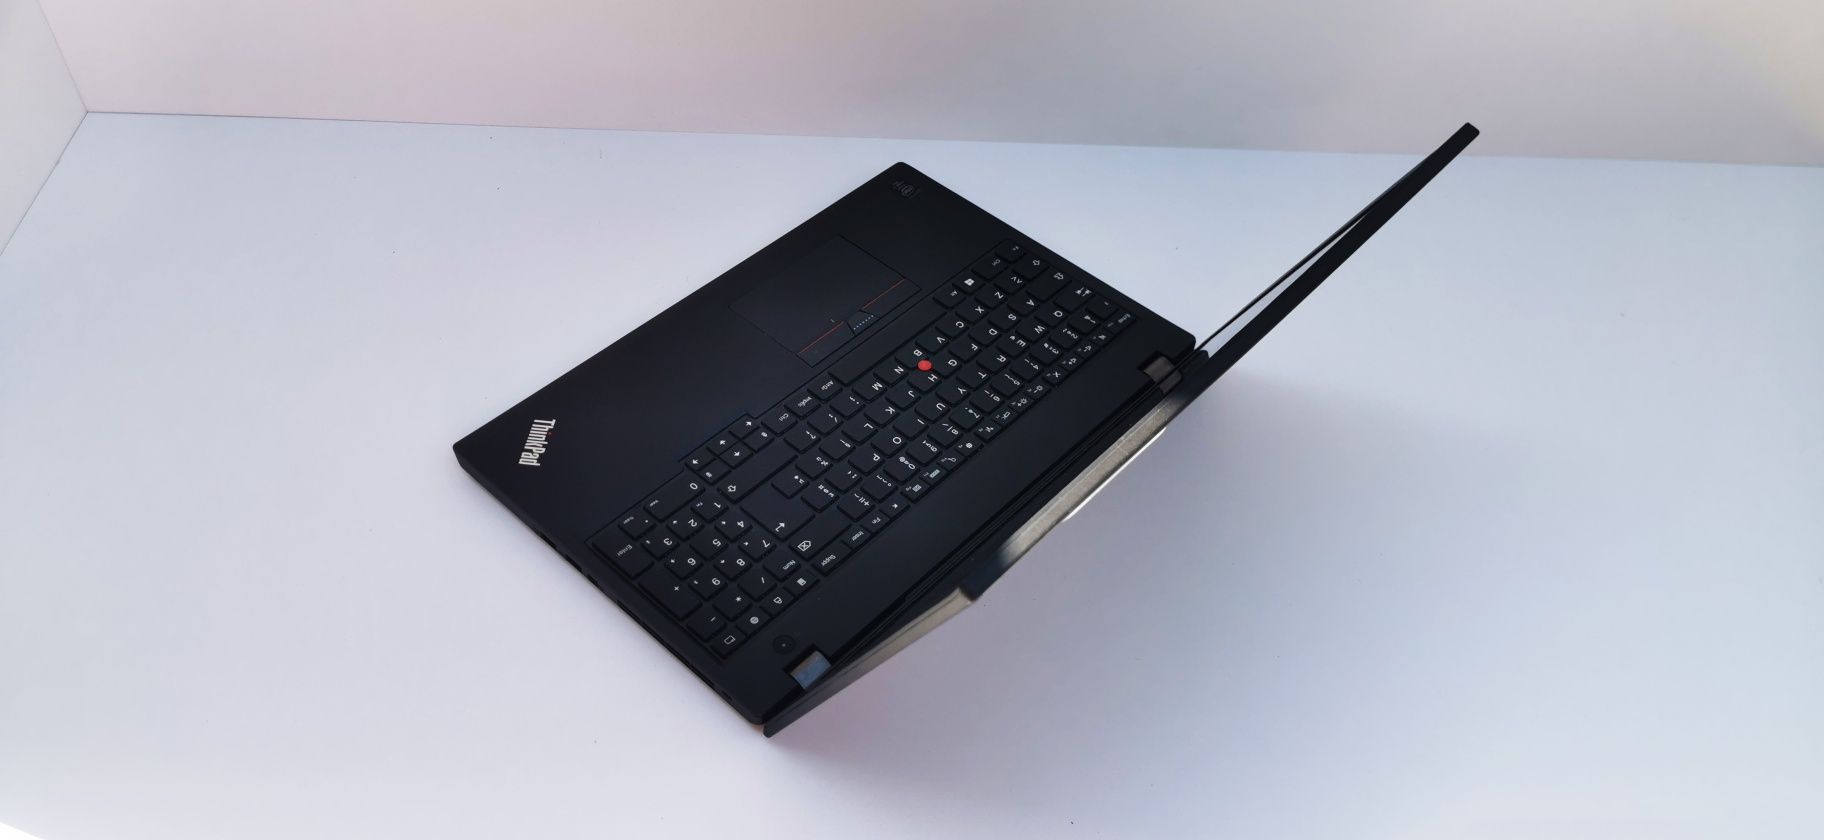 Lenovo ThinkPad W550s i7 5600U Configurabil dupa preferinte